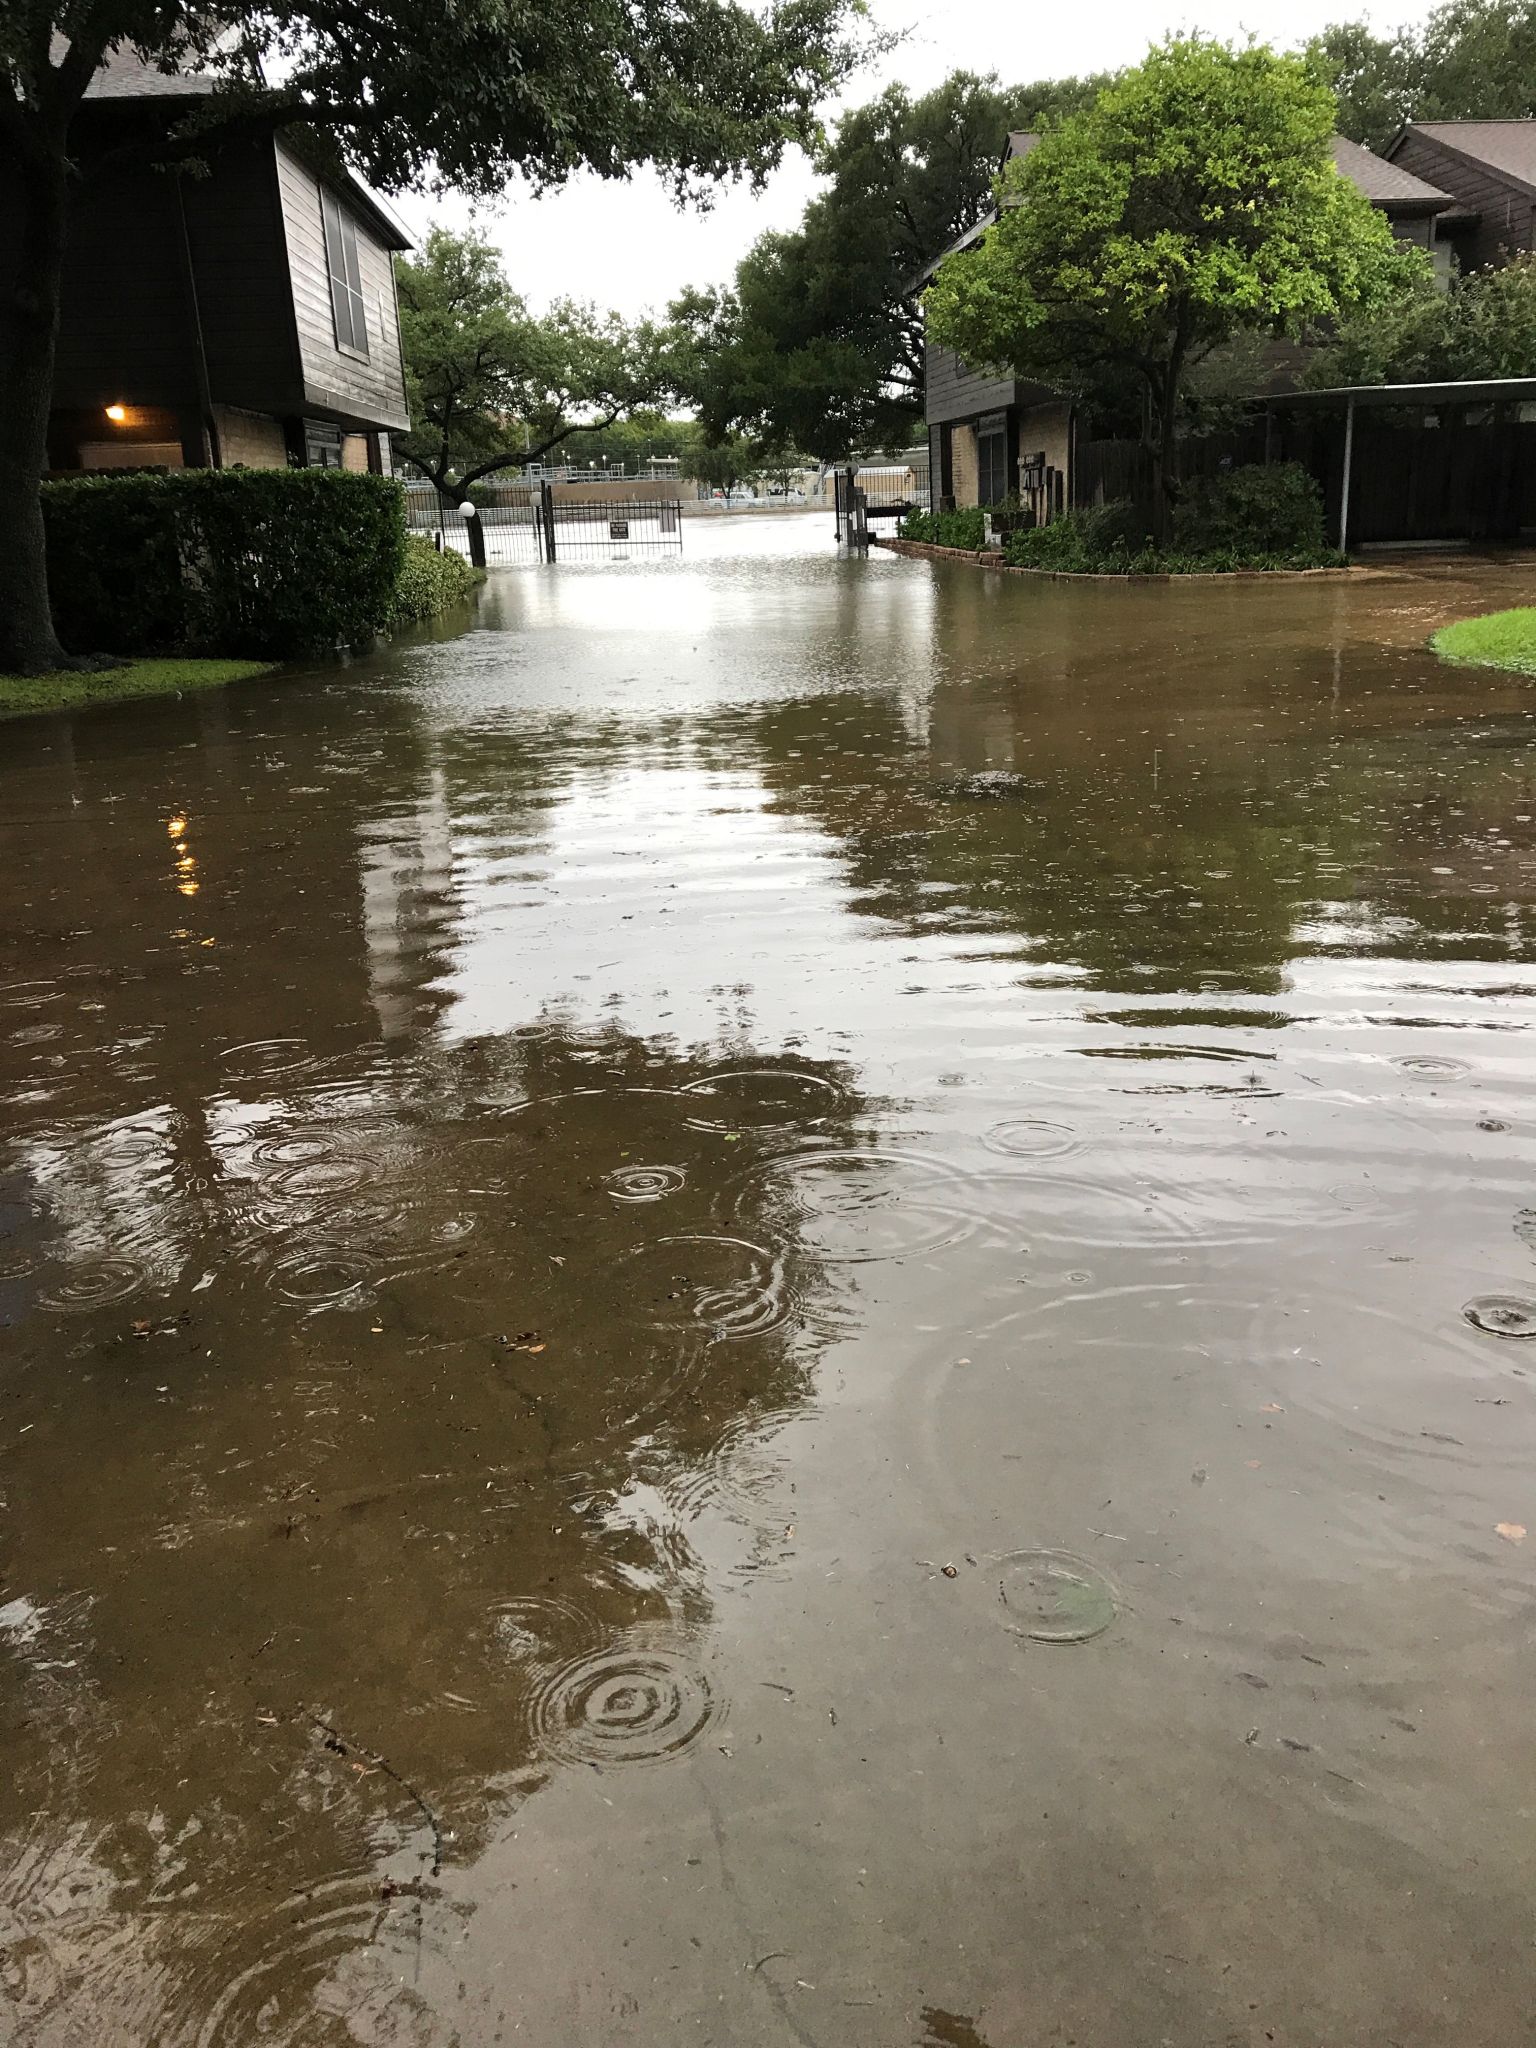 Harvey's floods will sink Houston home values - Beaumont Enterprise